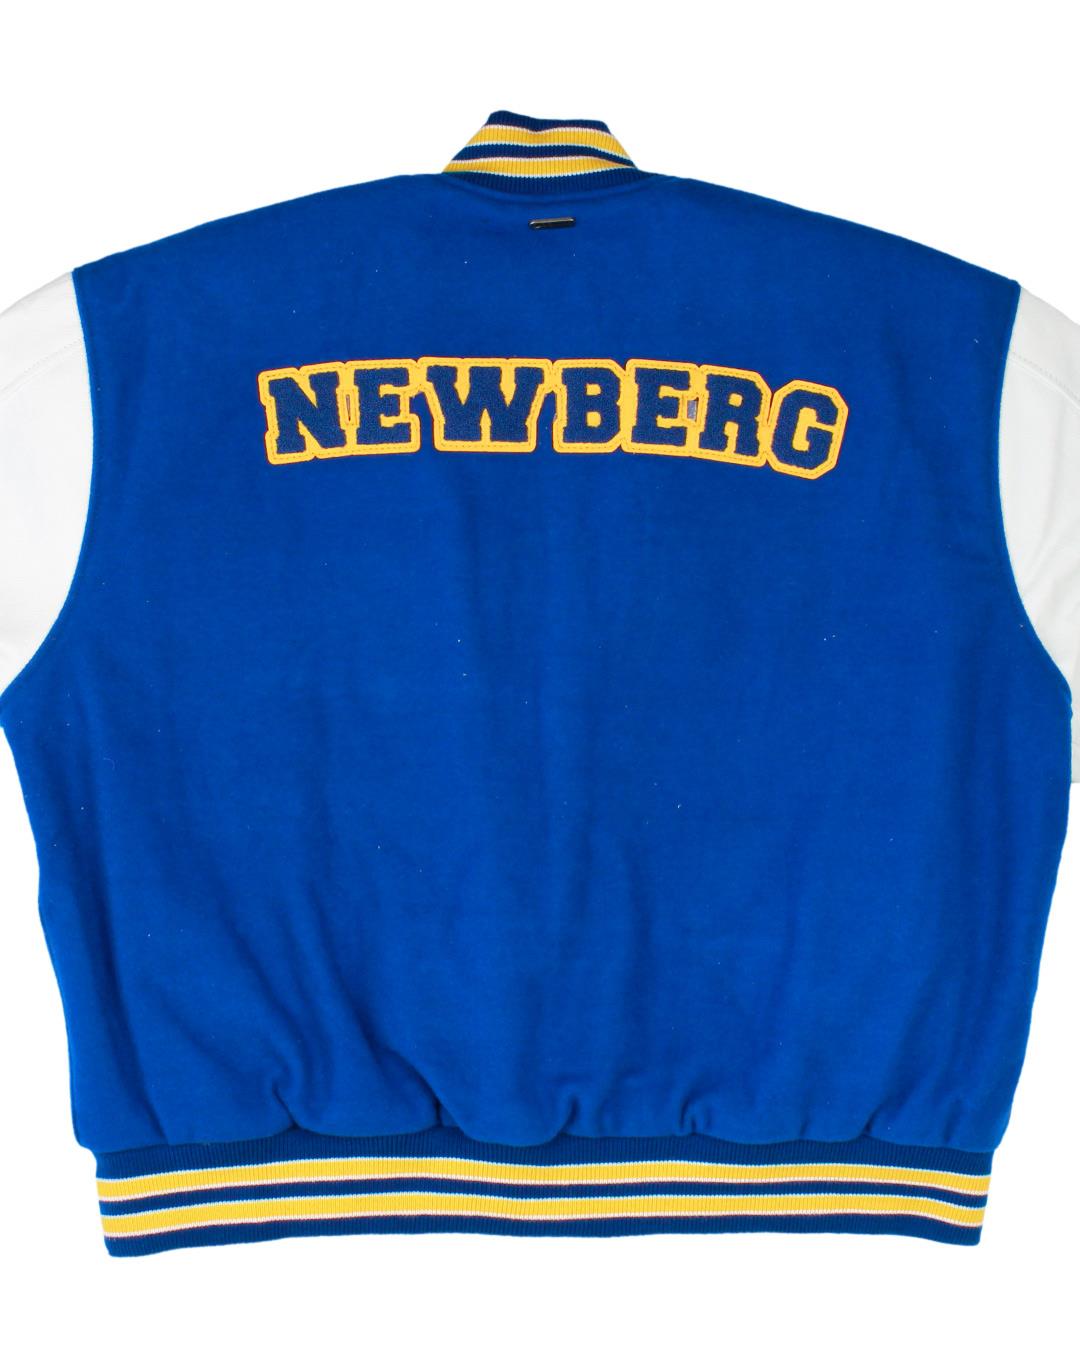 Newberg High School Varsity Jacket, Newberg OR - Back